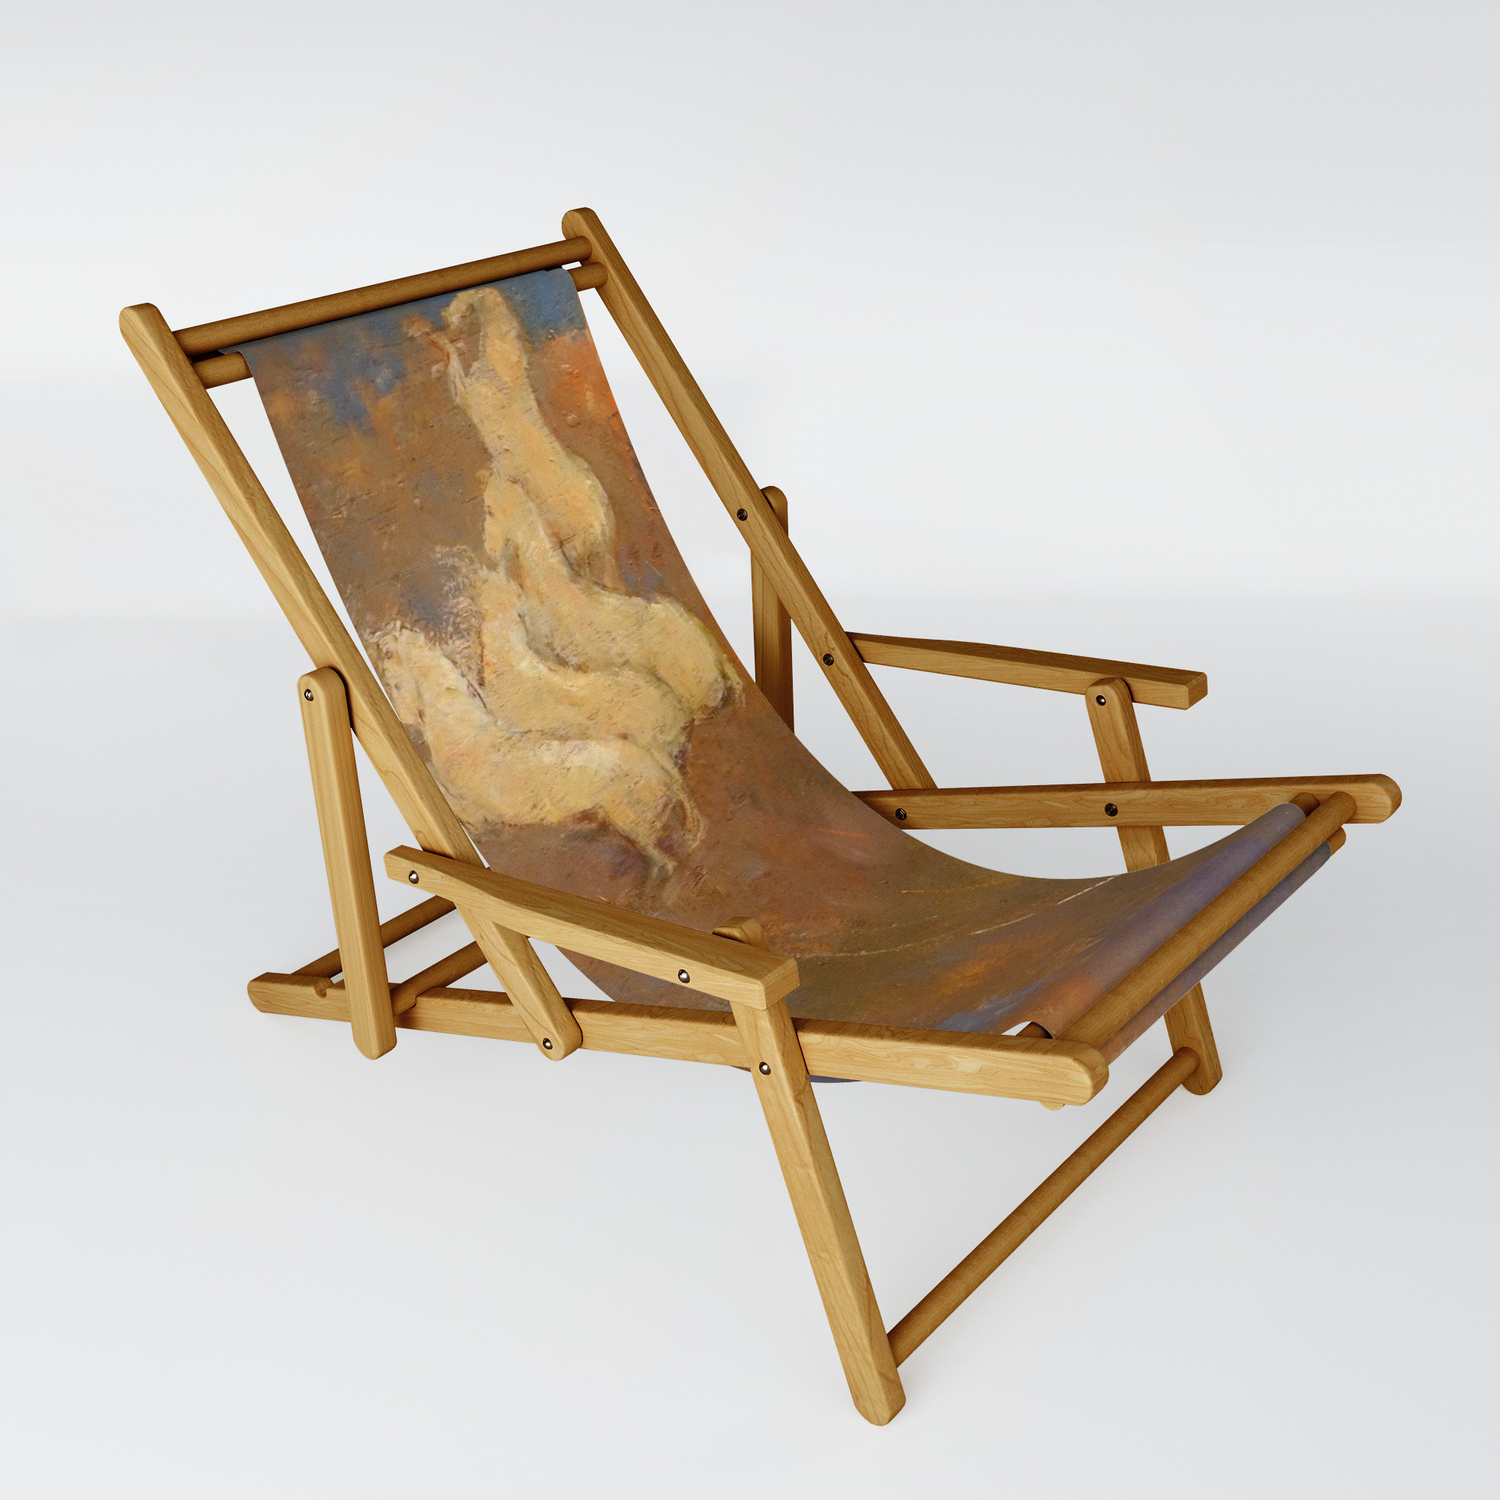 Chaniot Wooden Chair